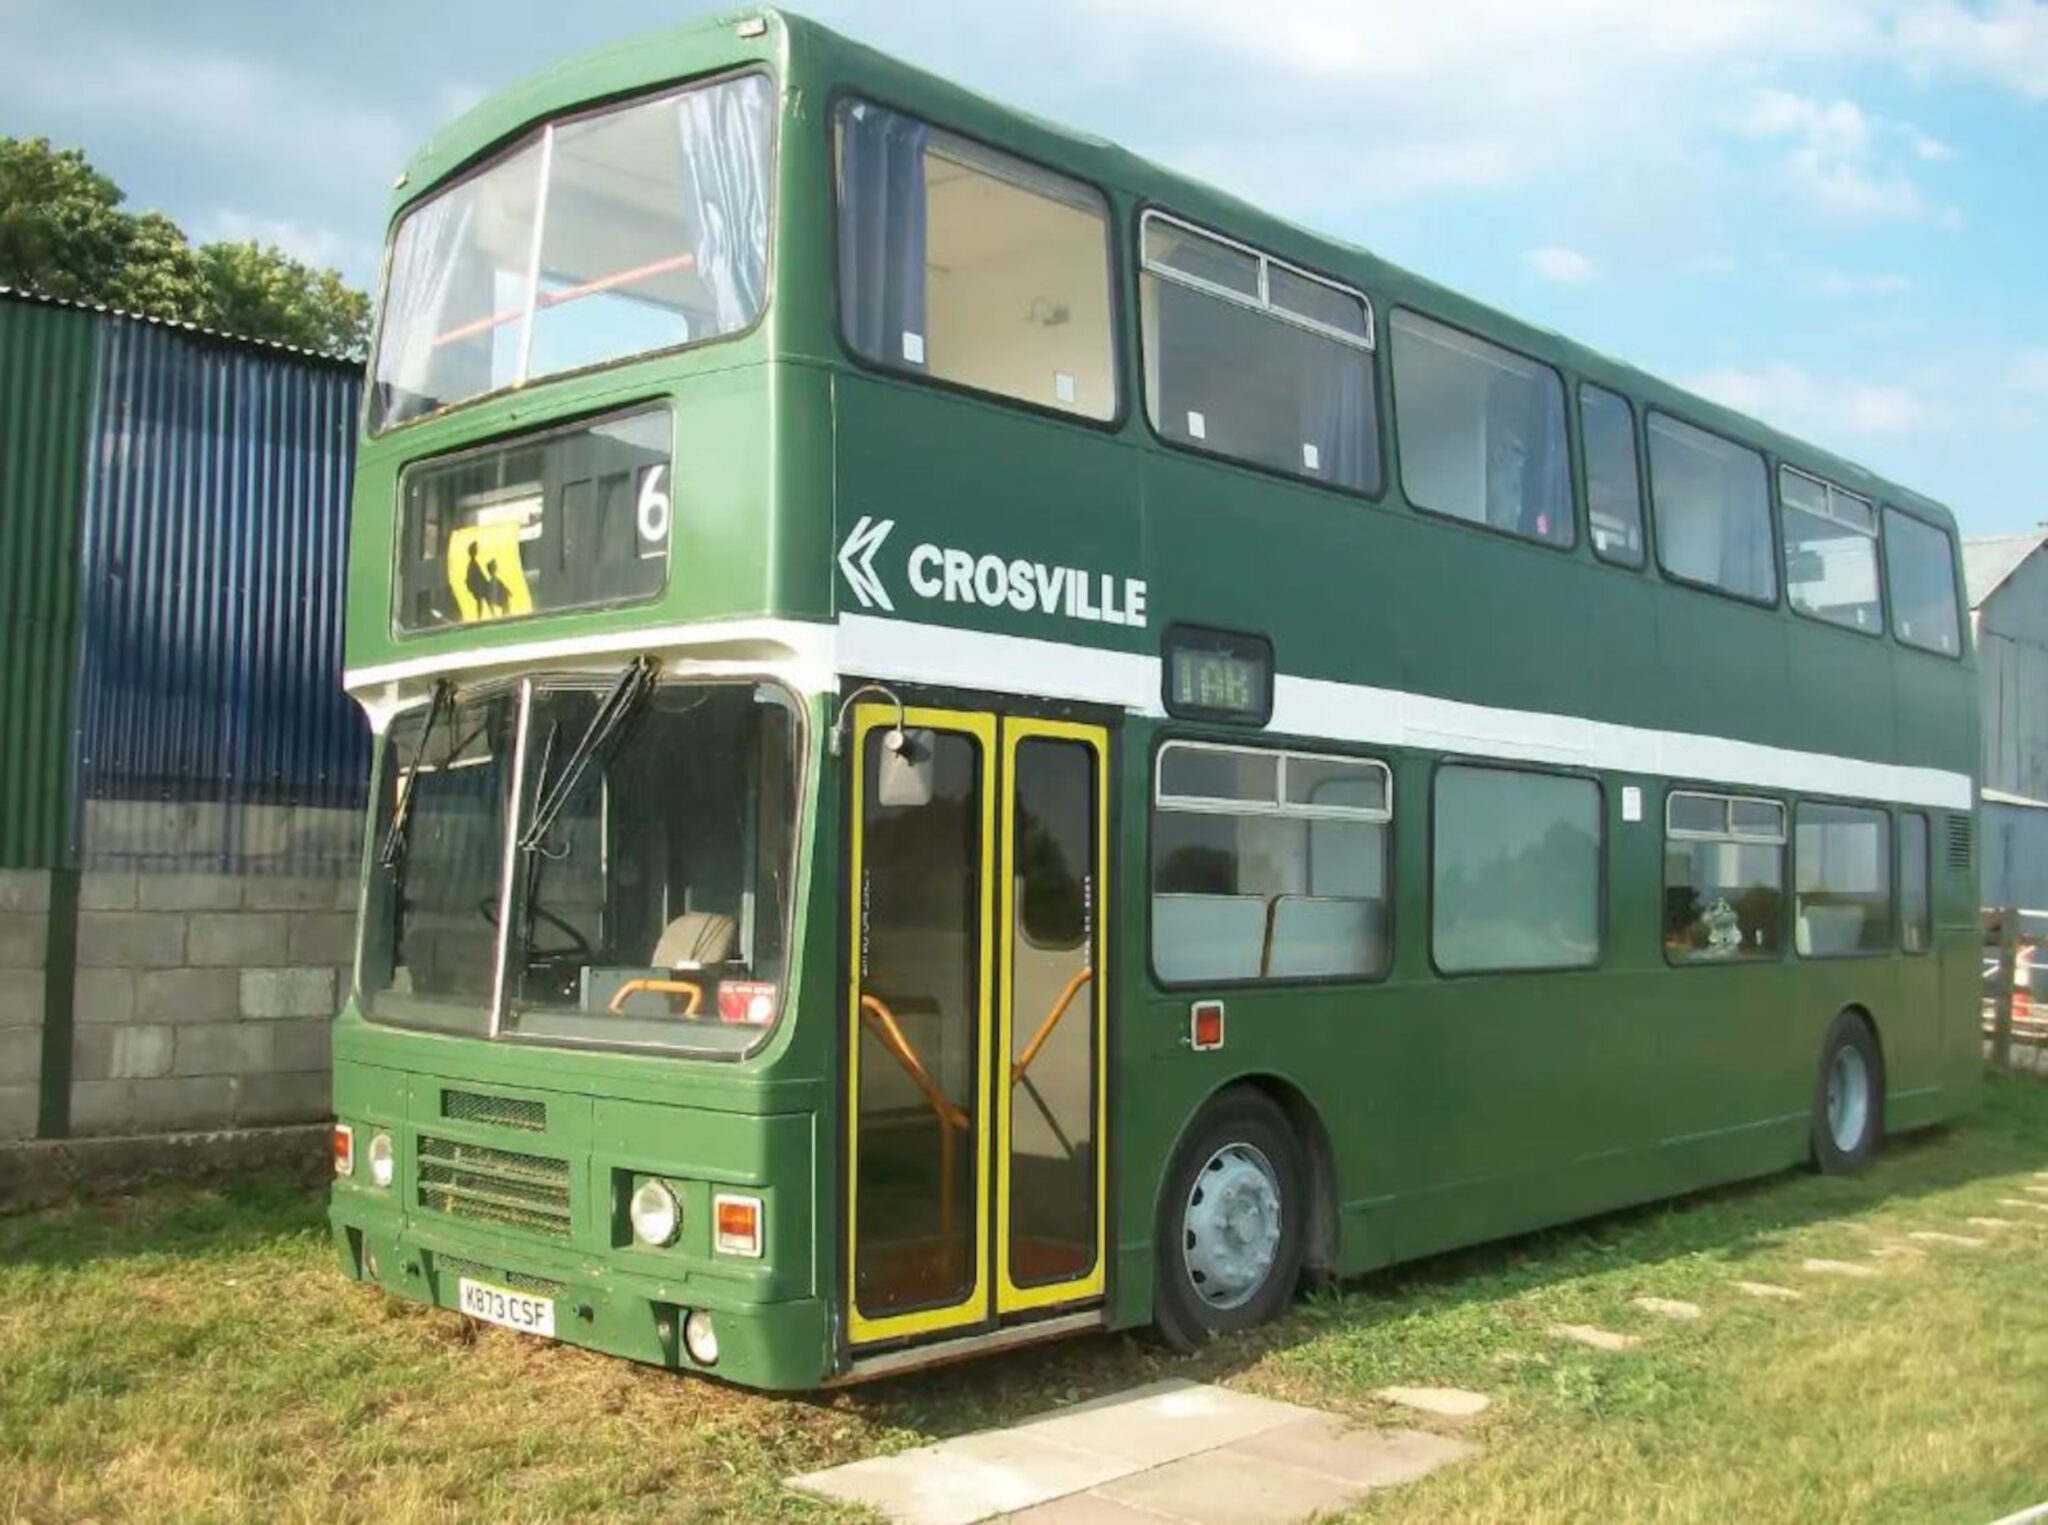 The double decker bus